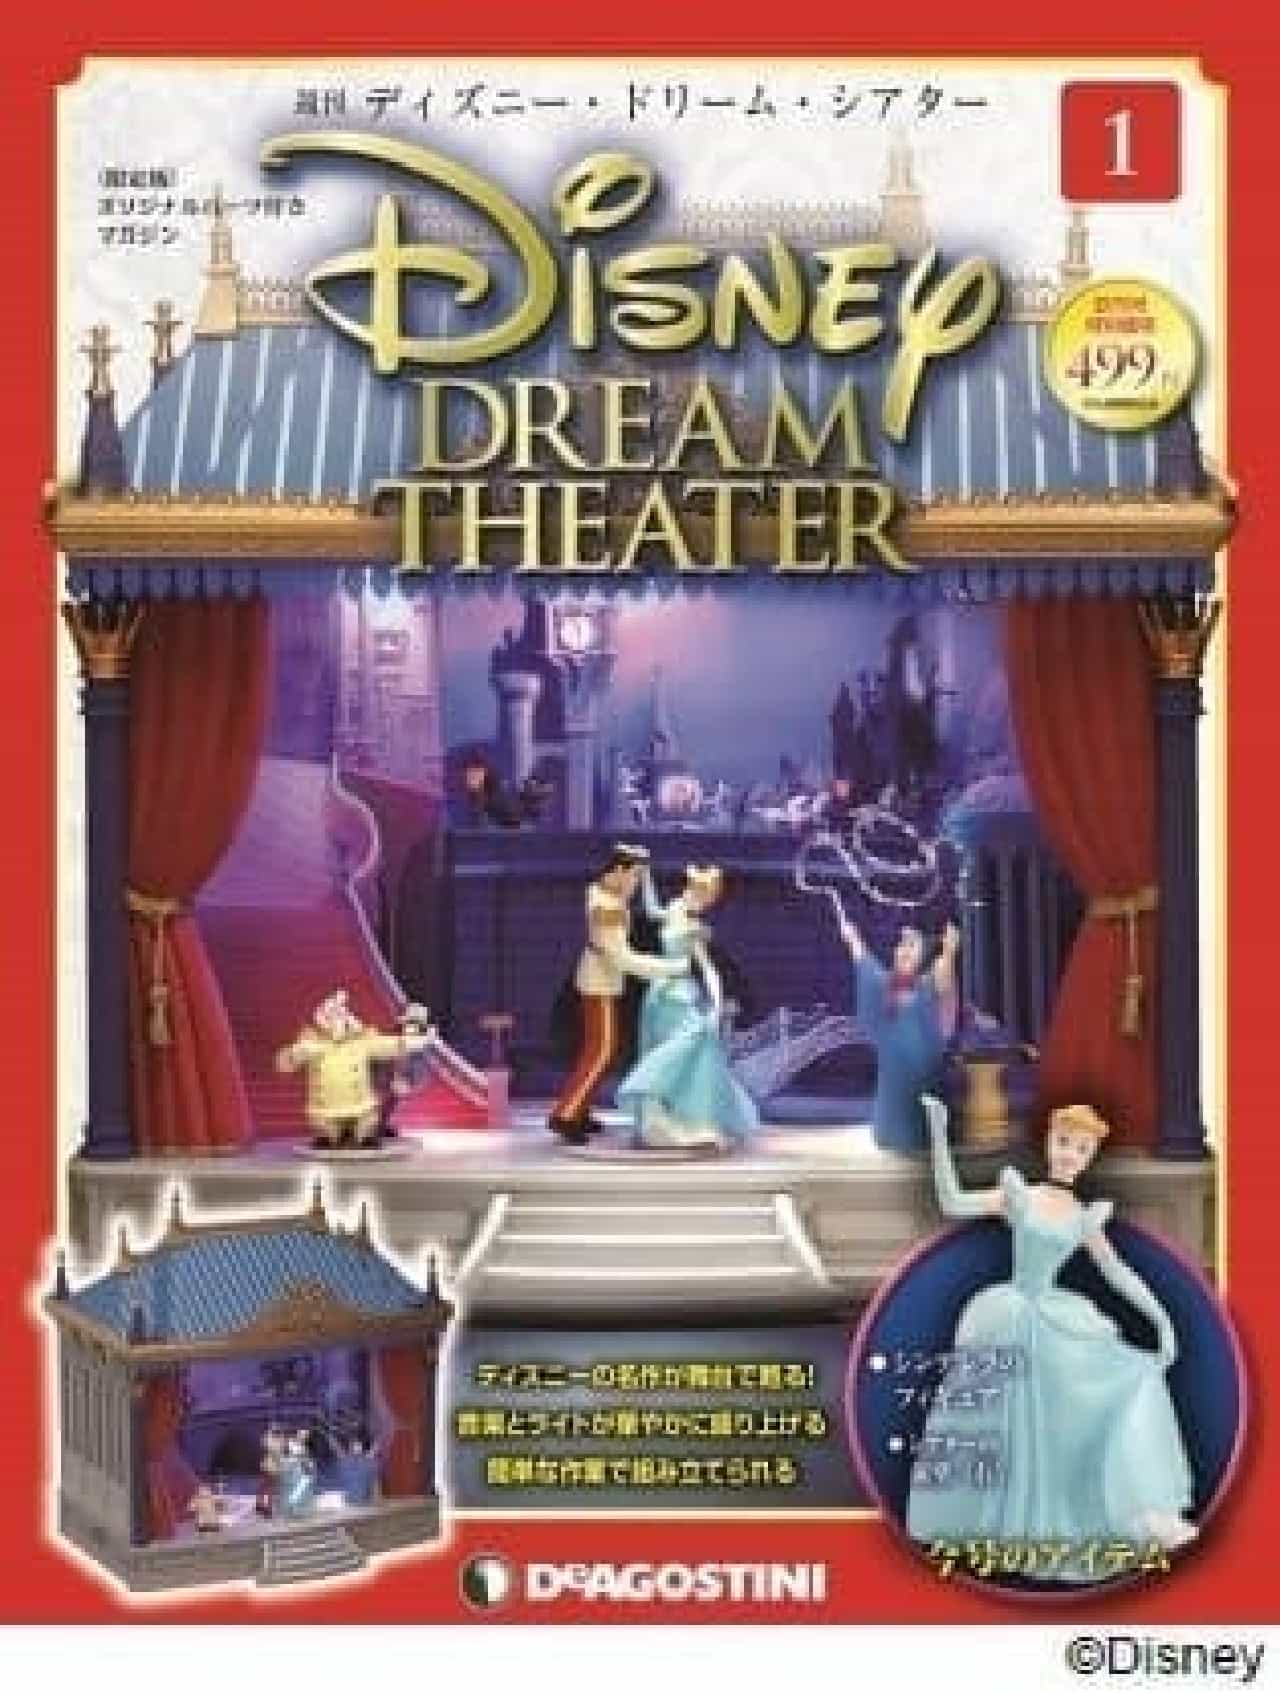 "Weekly Disney Dream Theater"